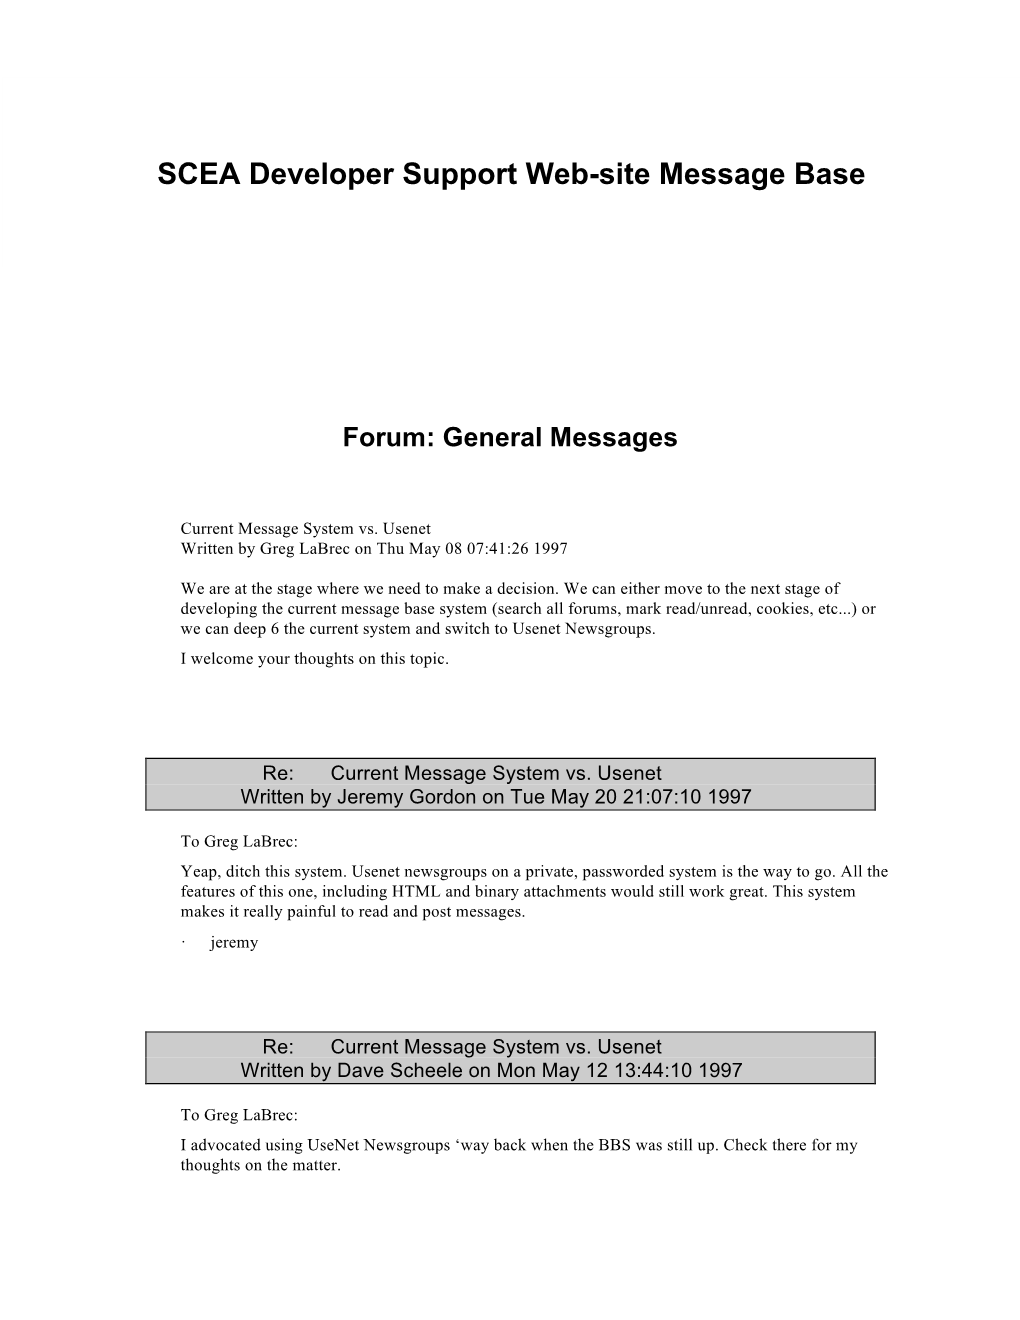 BBS\SCEA Web Messages